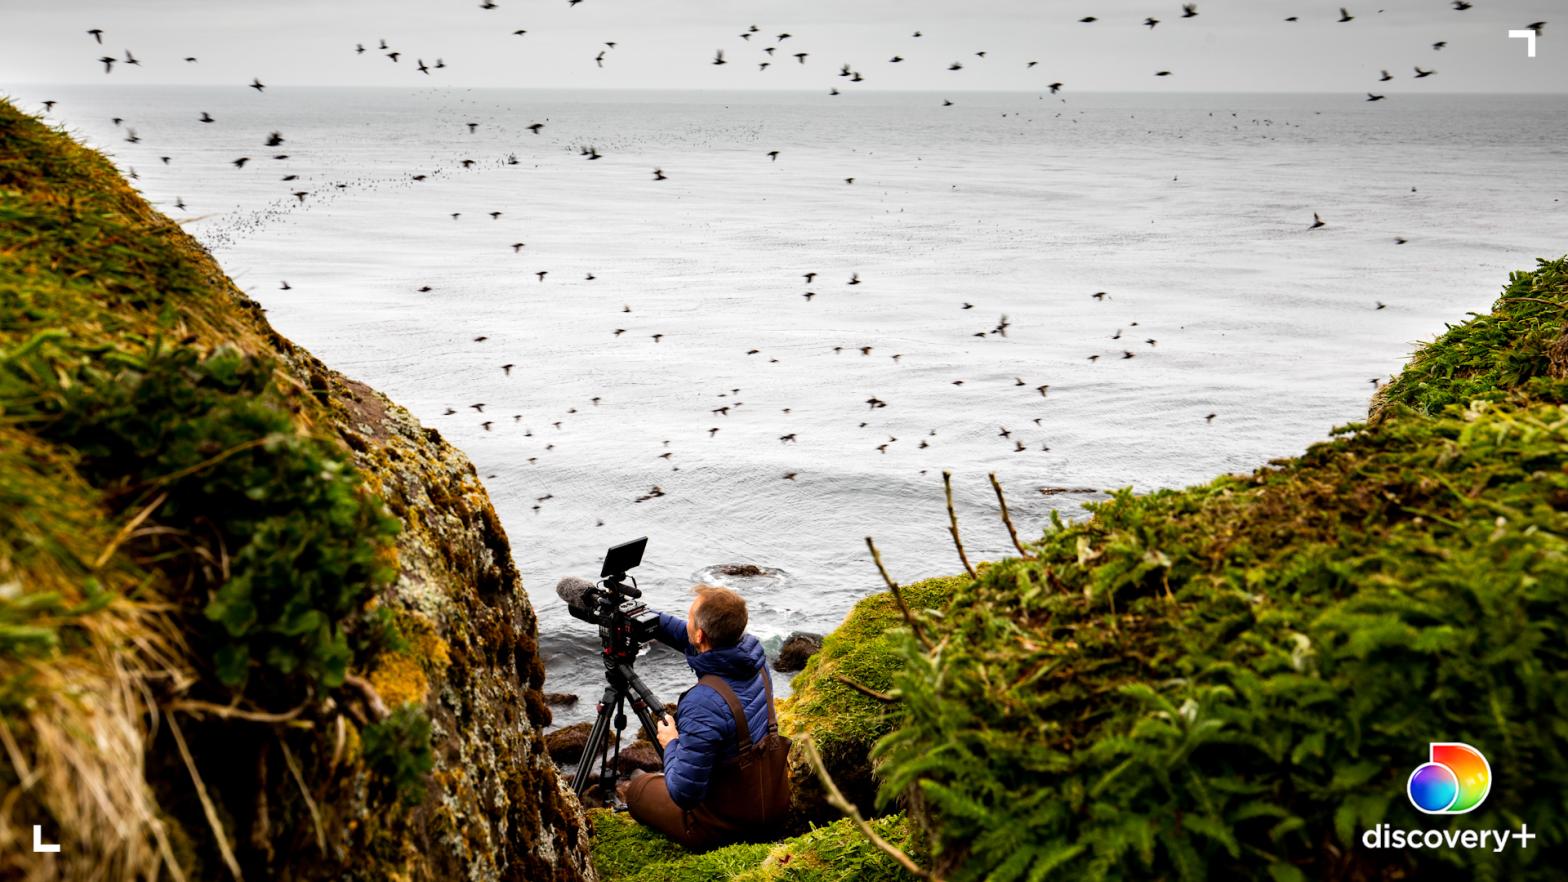 Ian Shive documents seabirds. (Photo: Ian Shive/discovery+)